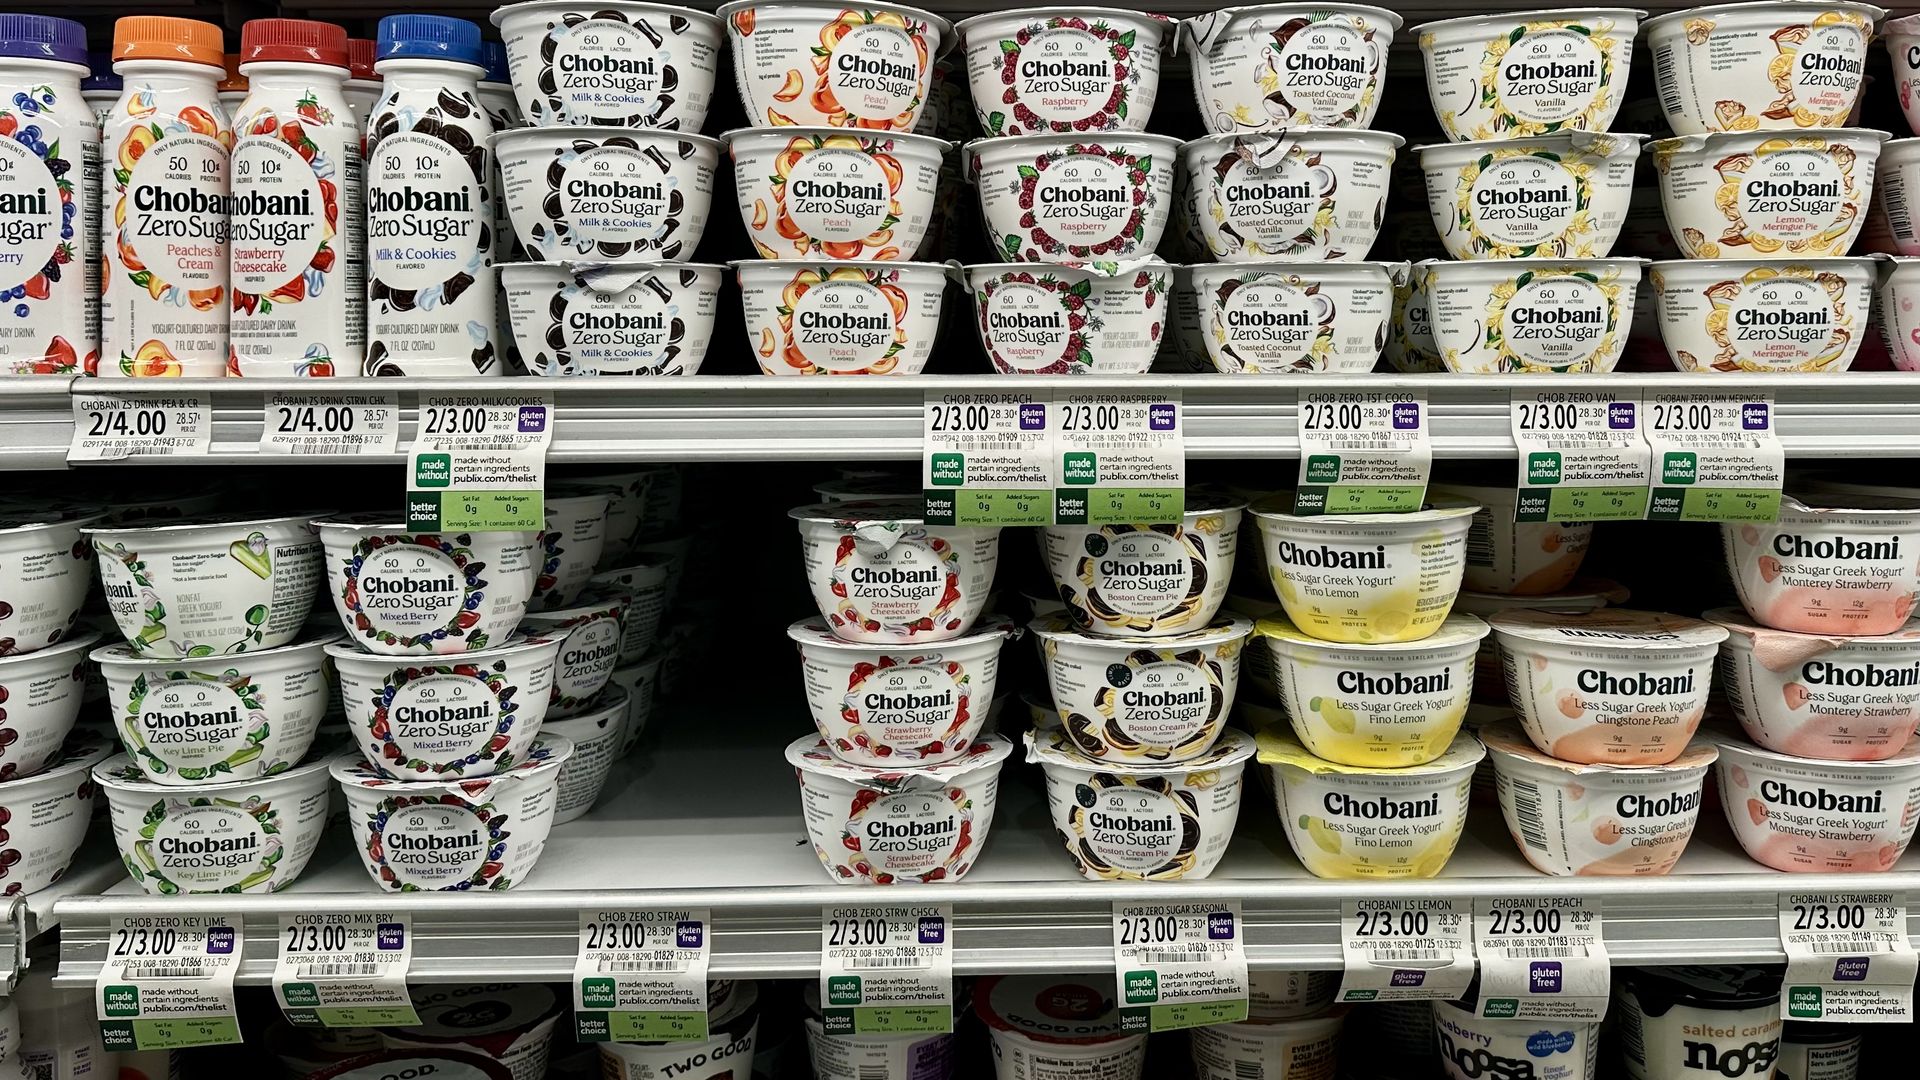 Chobani brand Greek yogurt on display in grocery store